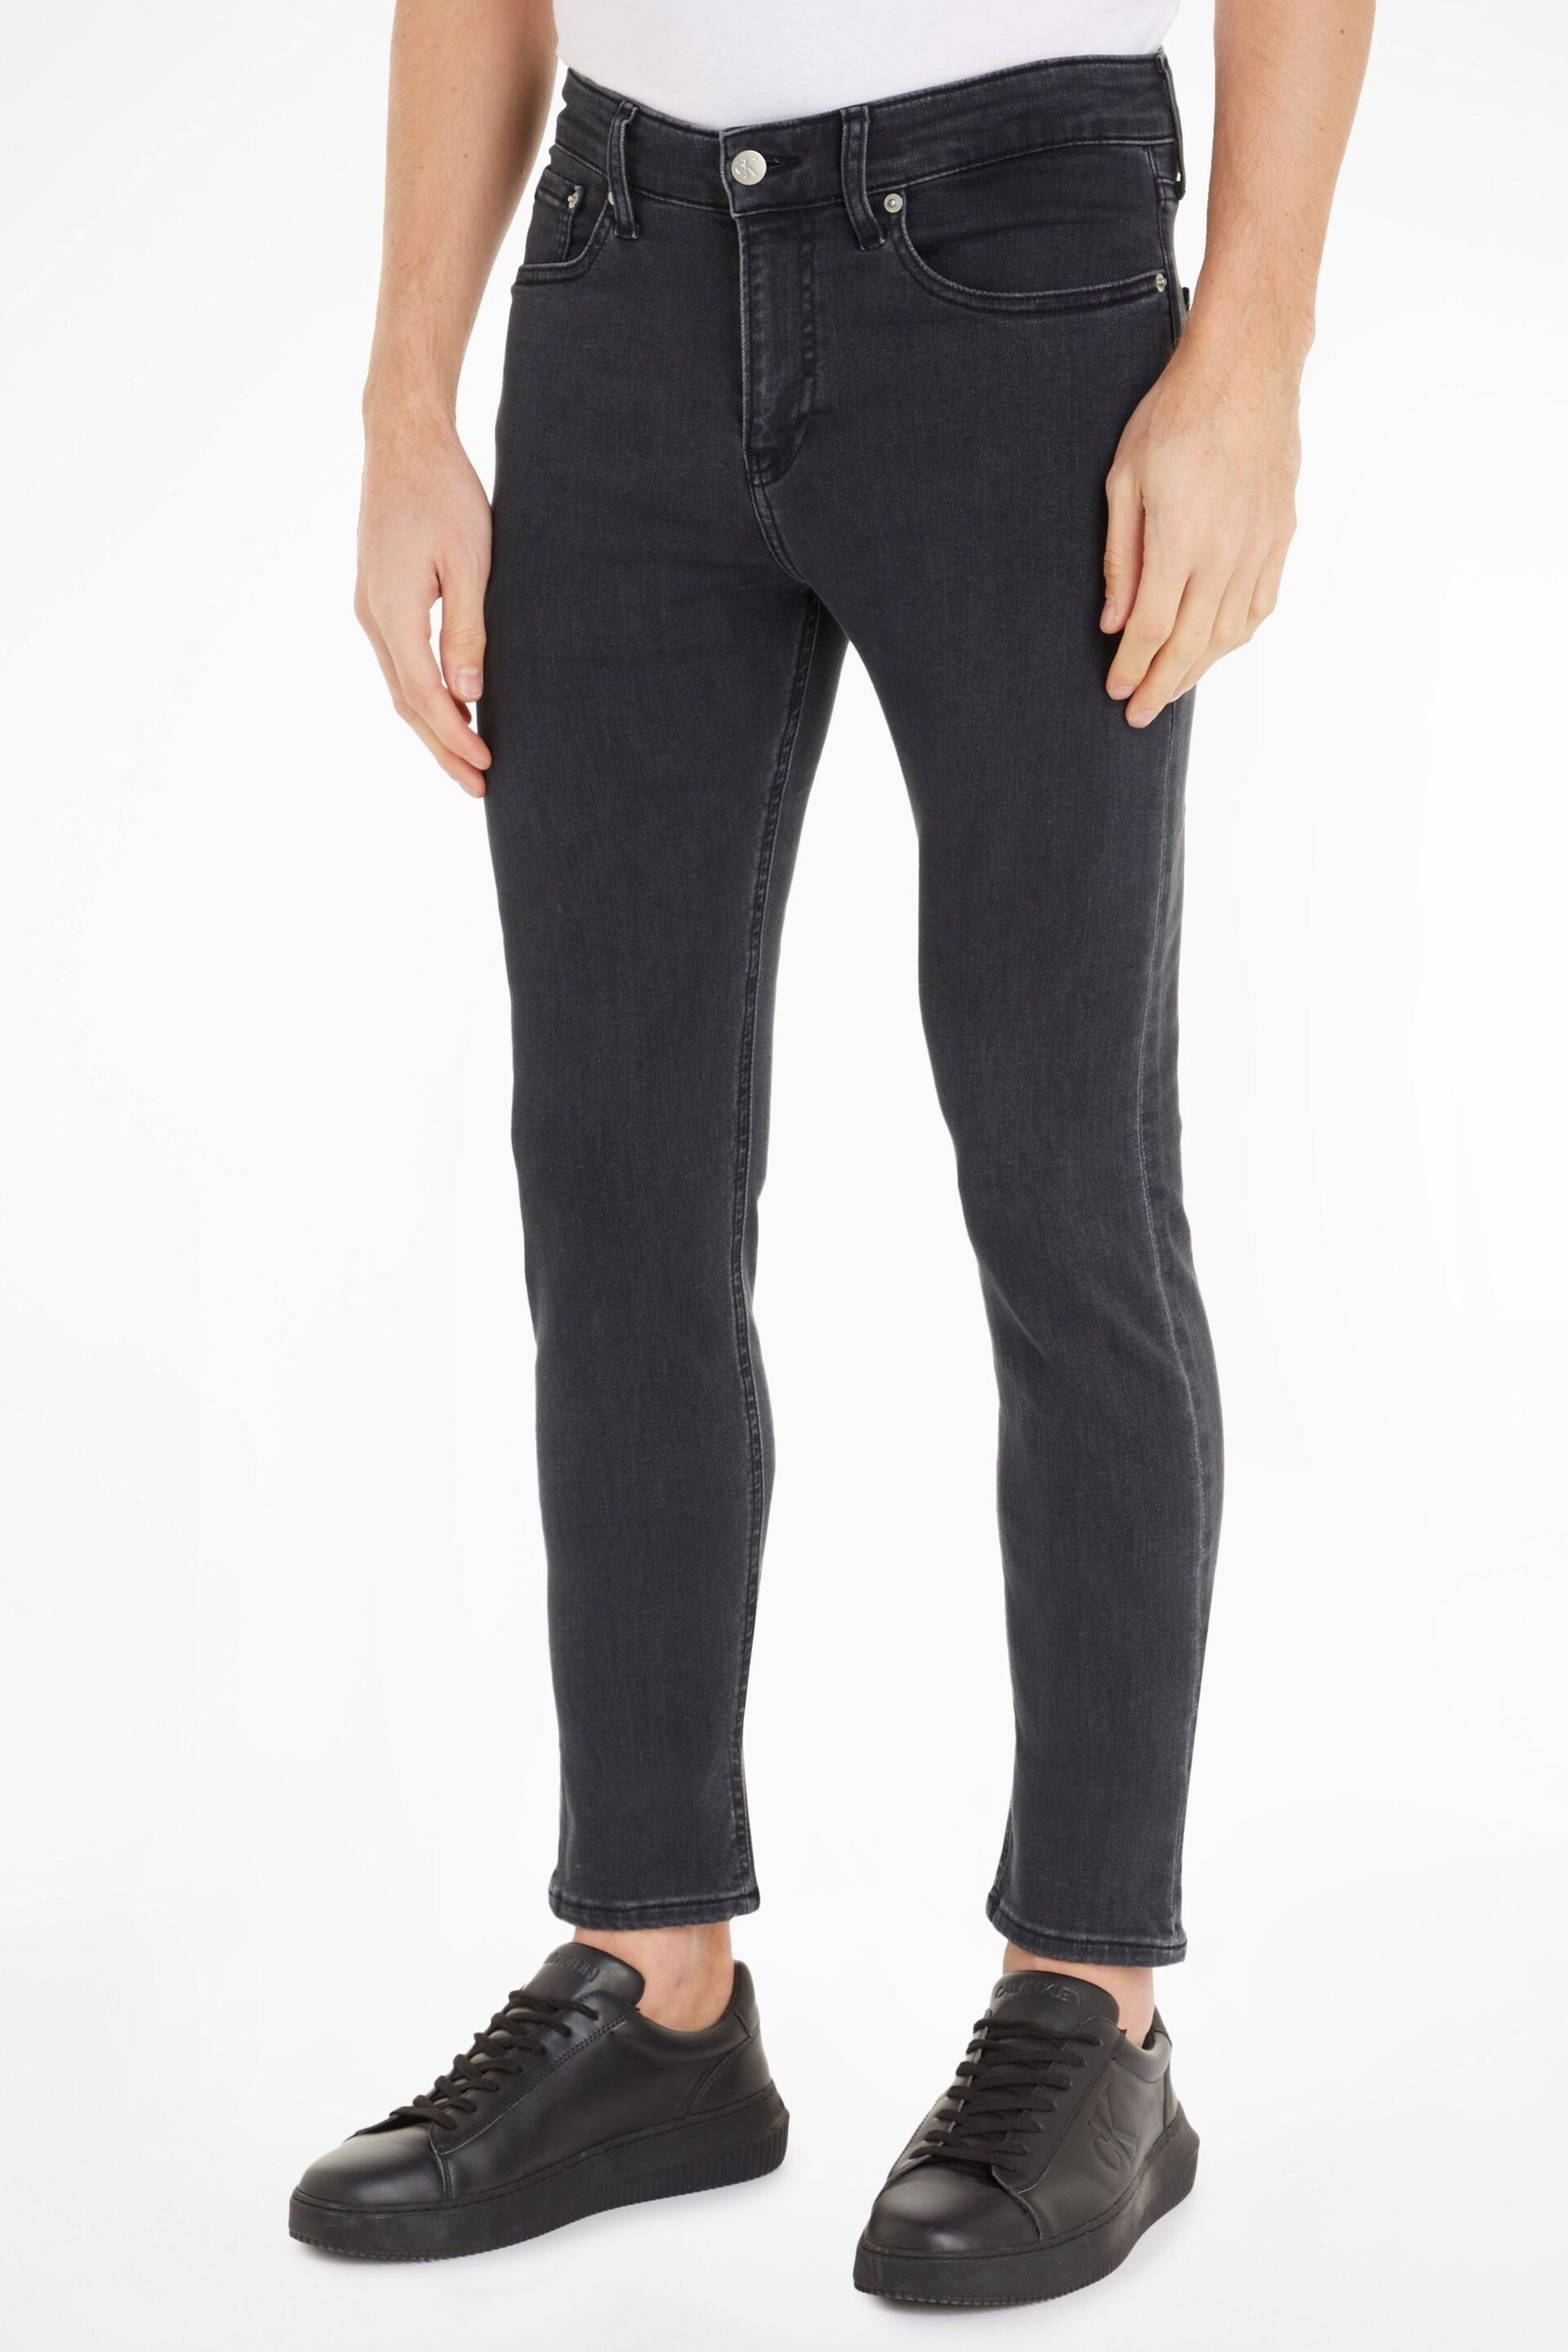 Calvin Klein Jeans Grey Skinny Jeans - Image 1 of 9